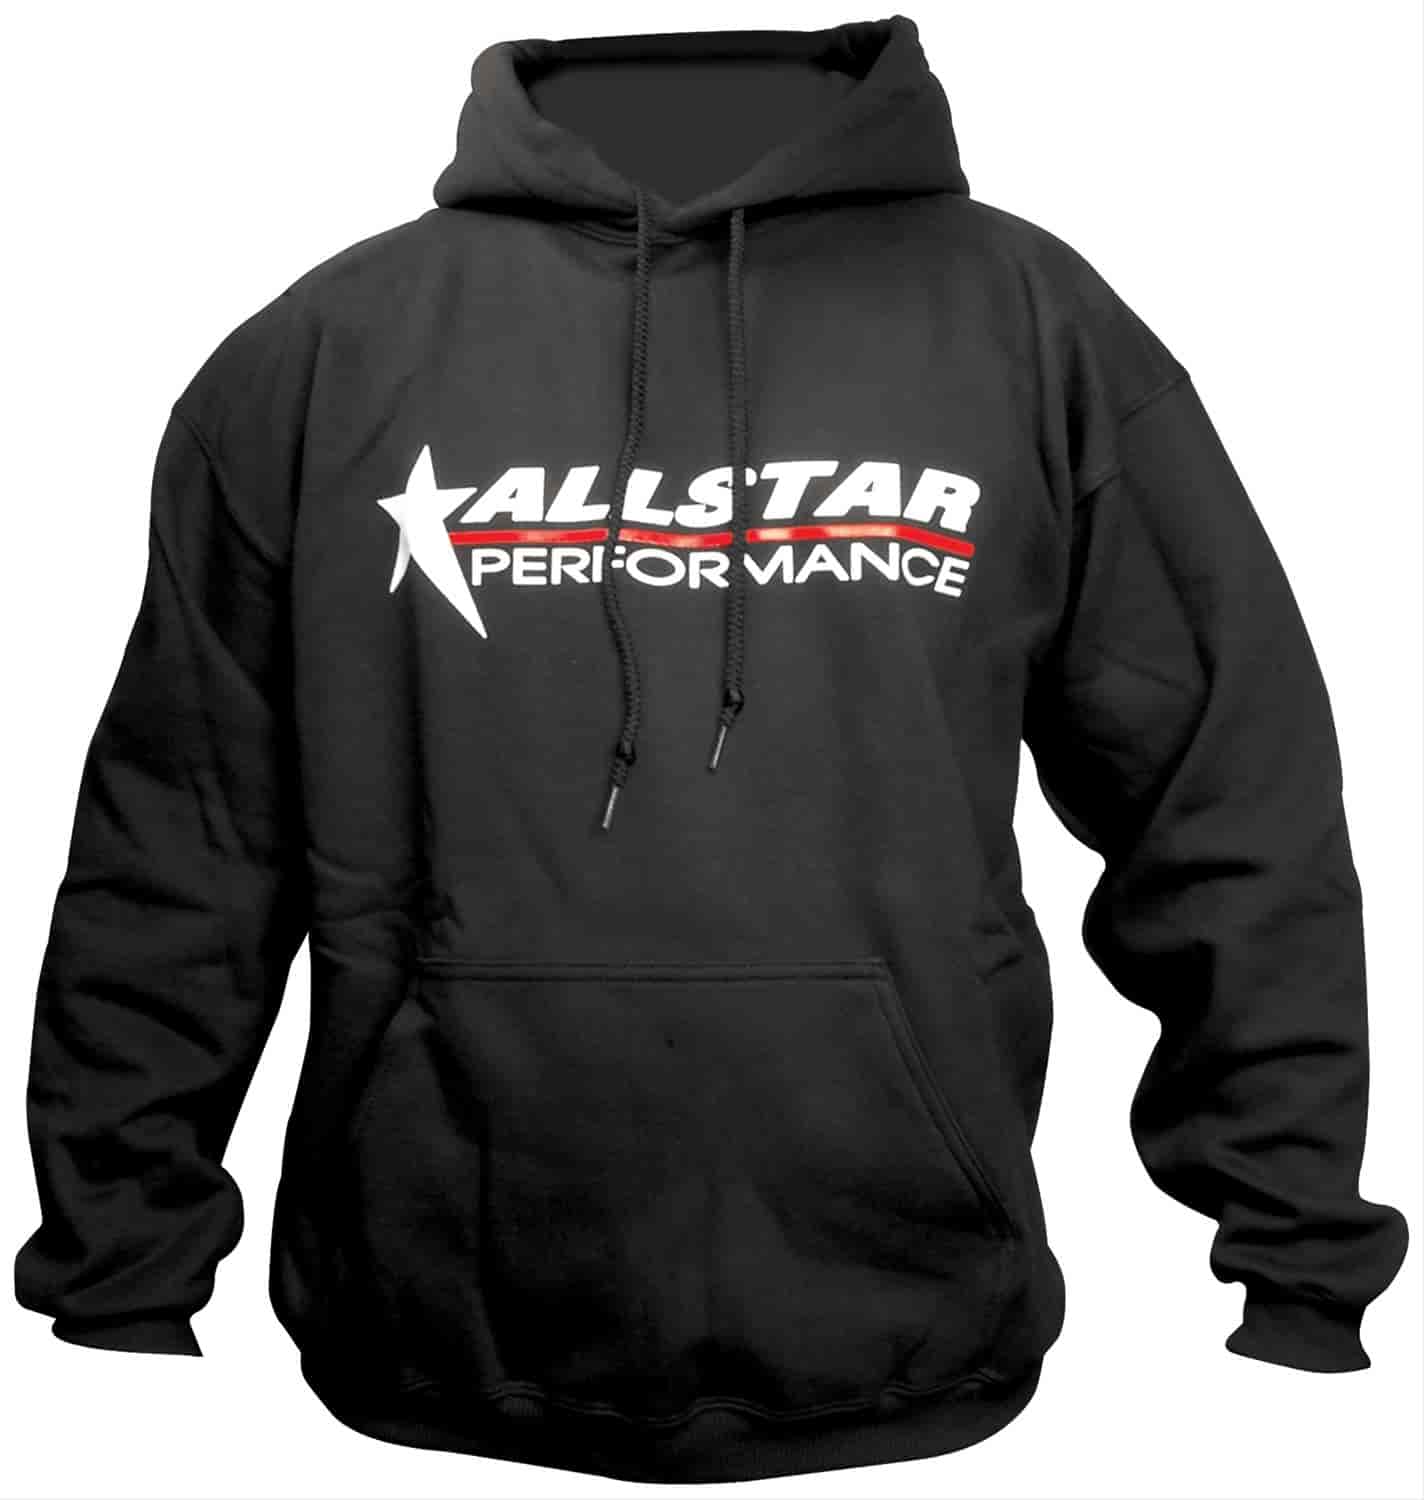 Allstar Performance Hooded Sweatshirt